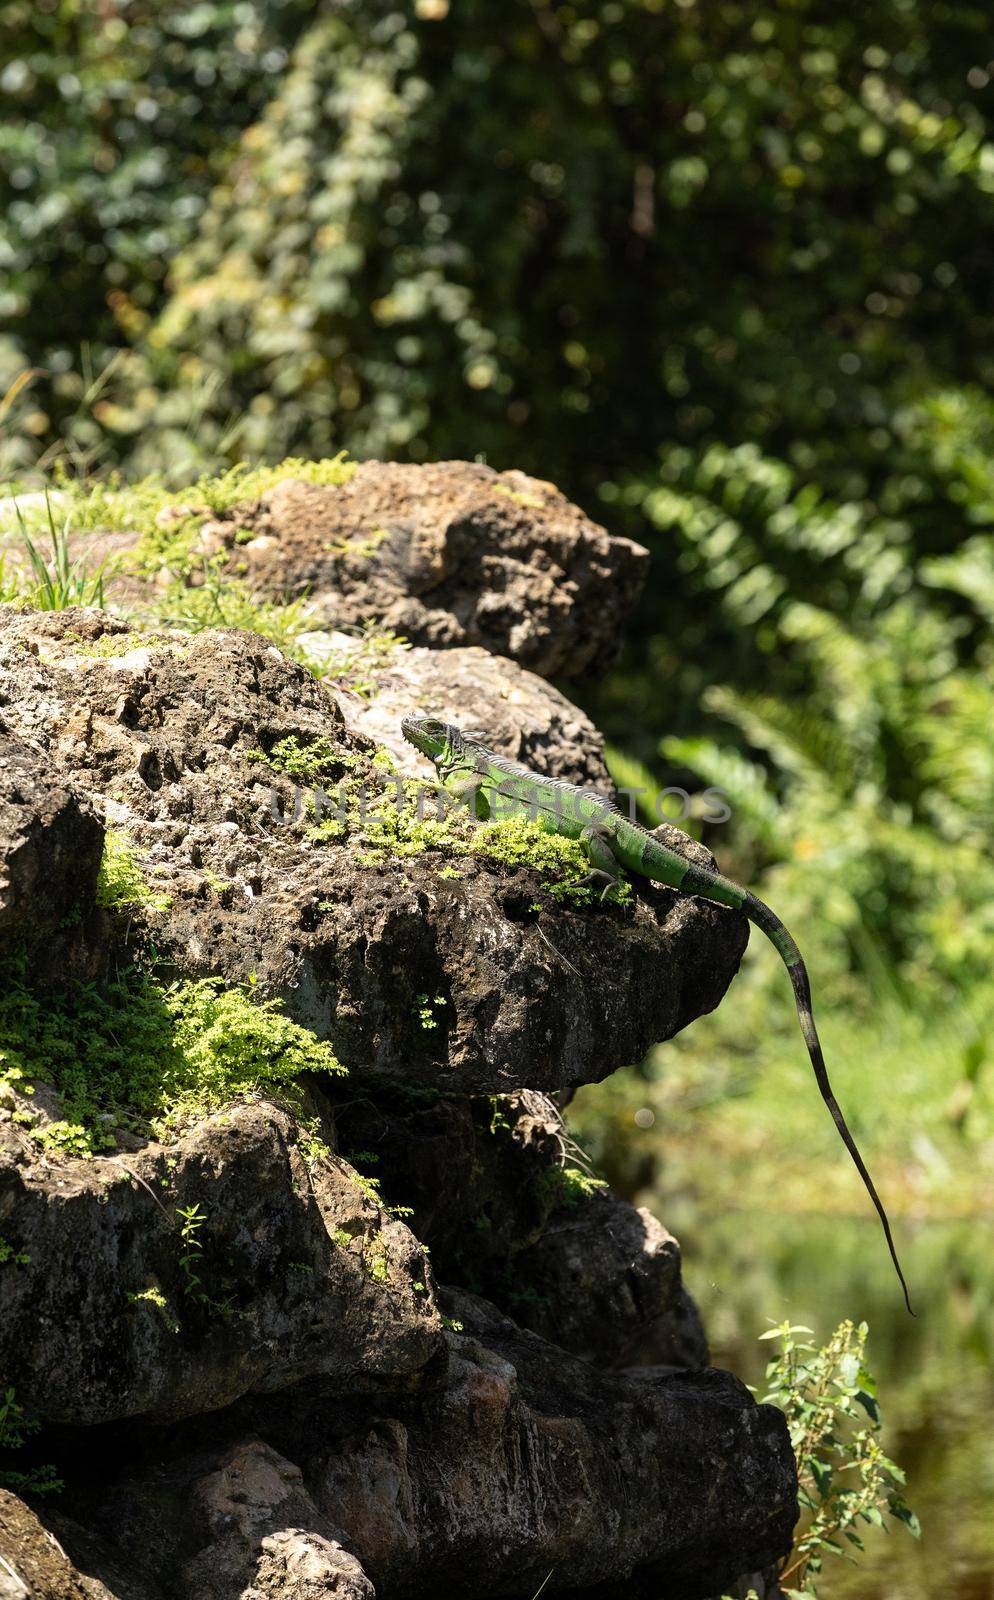 Green Iguana lizard also called Iguana iguana suns itself on a rock in Naples, Florida